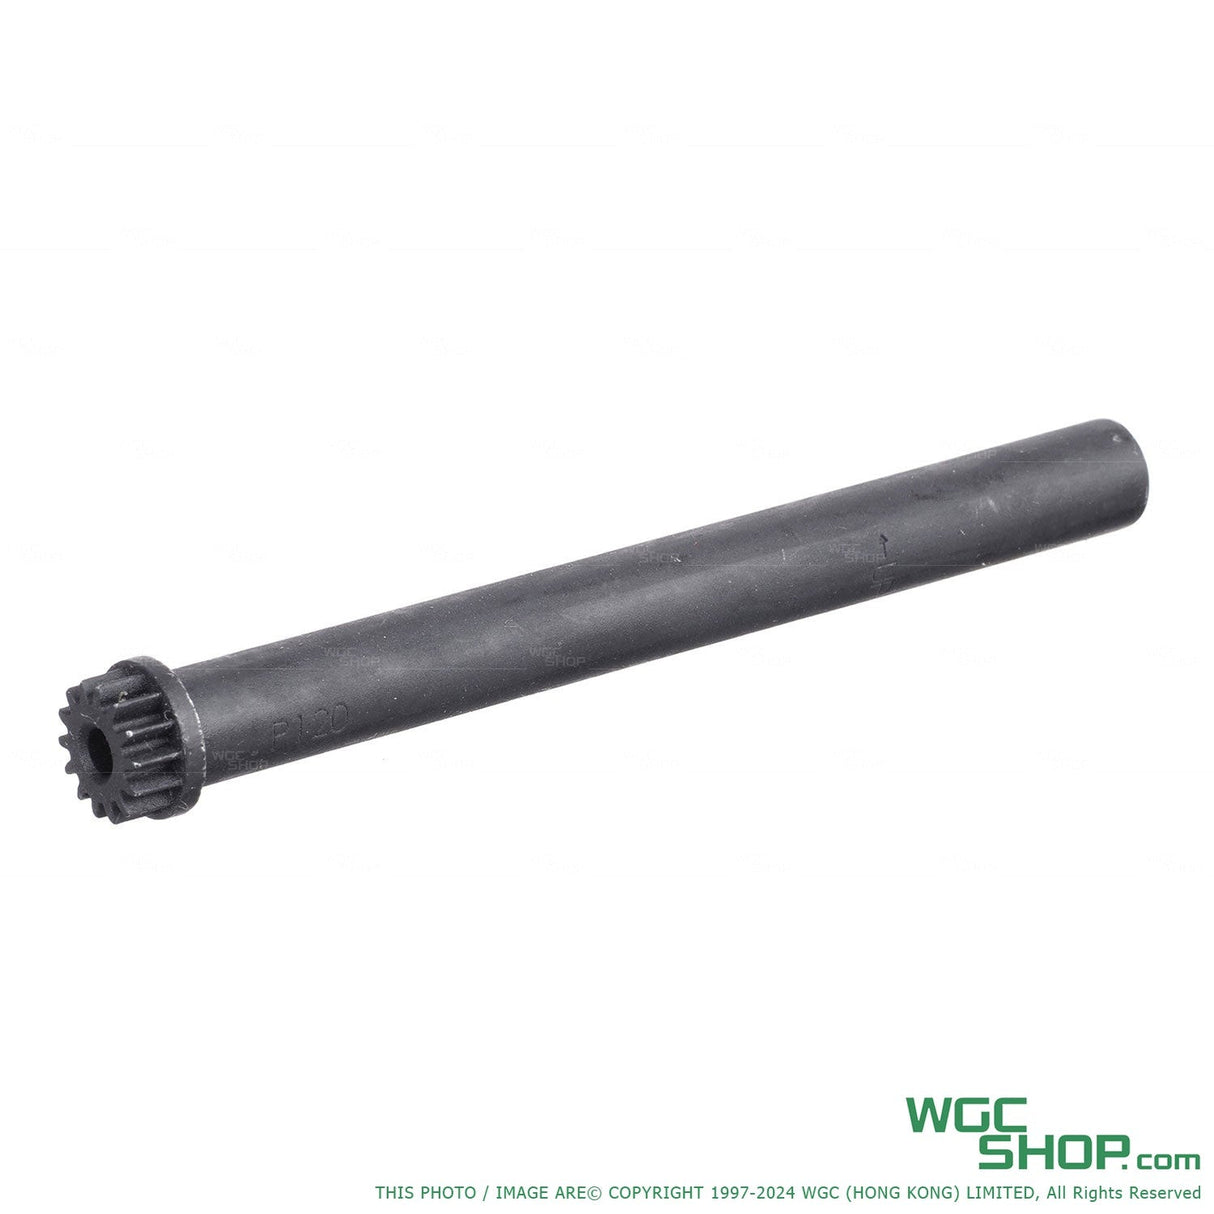 VFC Original Parts - MK25 GBB Recoil Spring Guide Rod ( VGCJSPC010 / 02-13 )